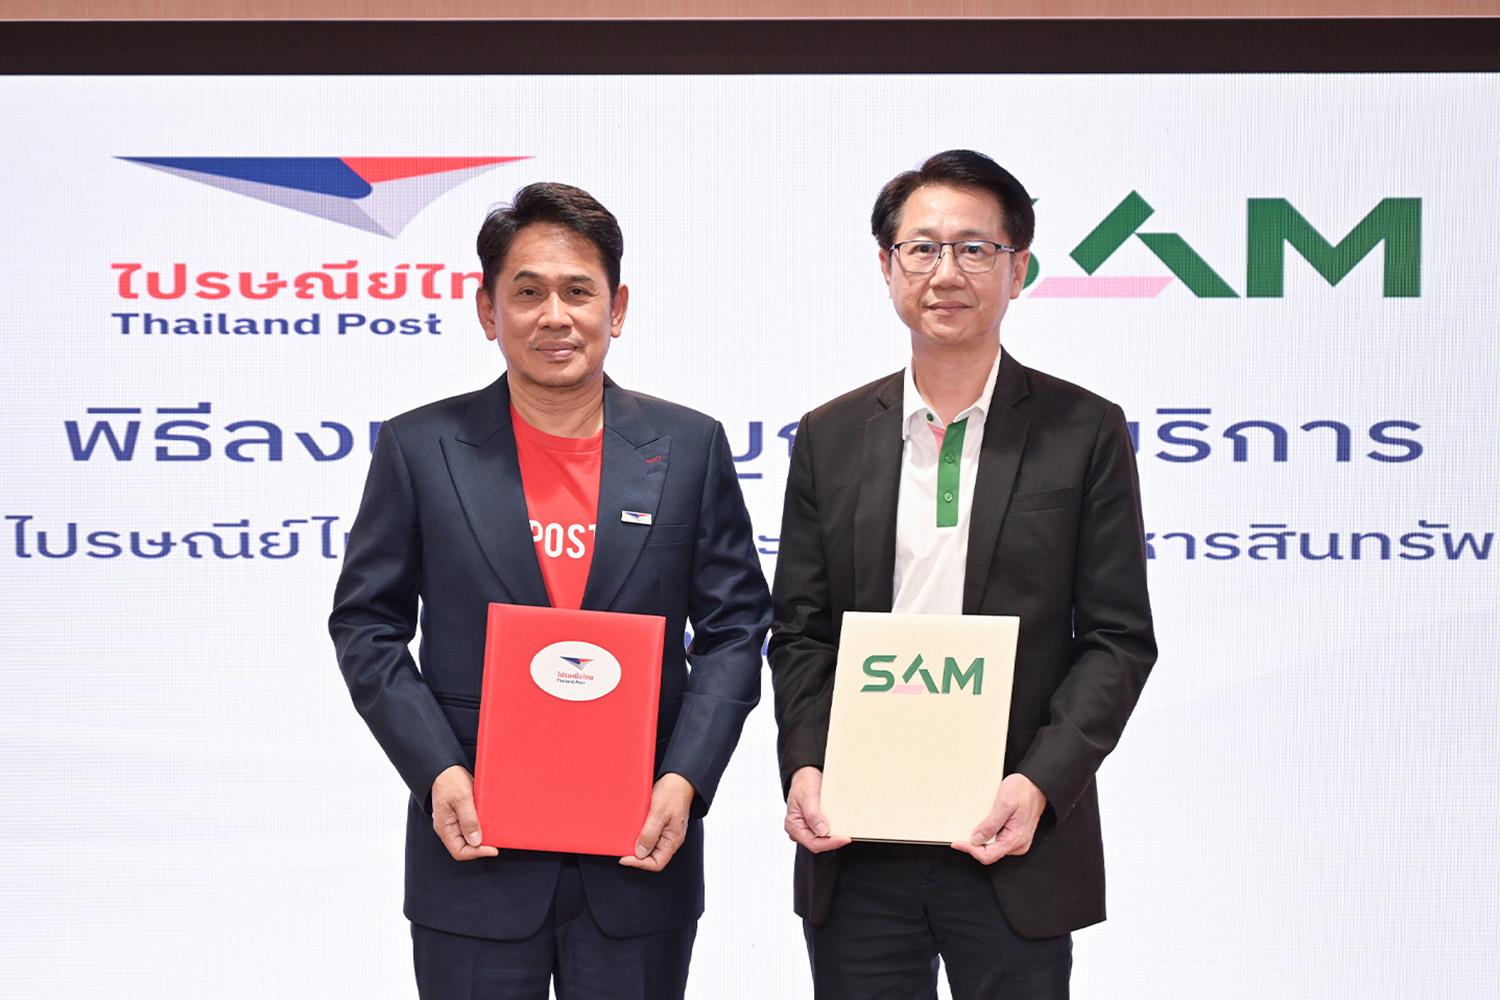 sam-signs-contract-thailand-post-survey-npa-assets-SPACEBAR-Hero.jpg